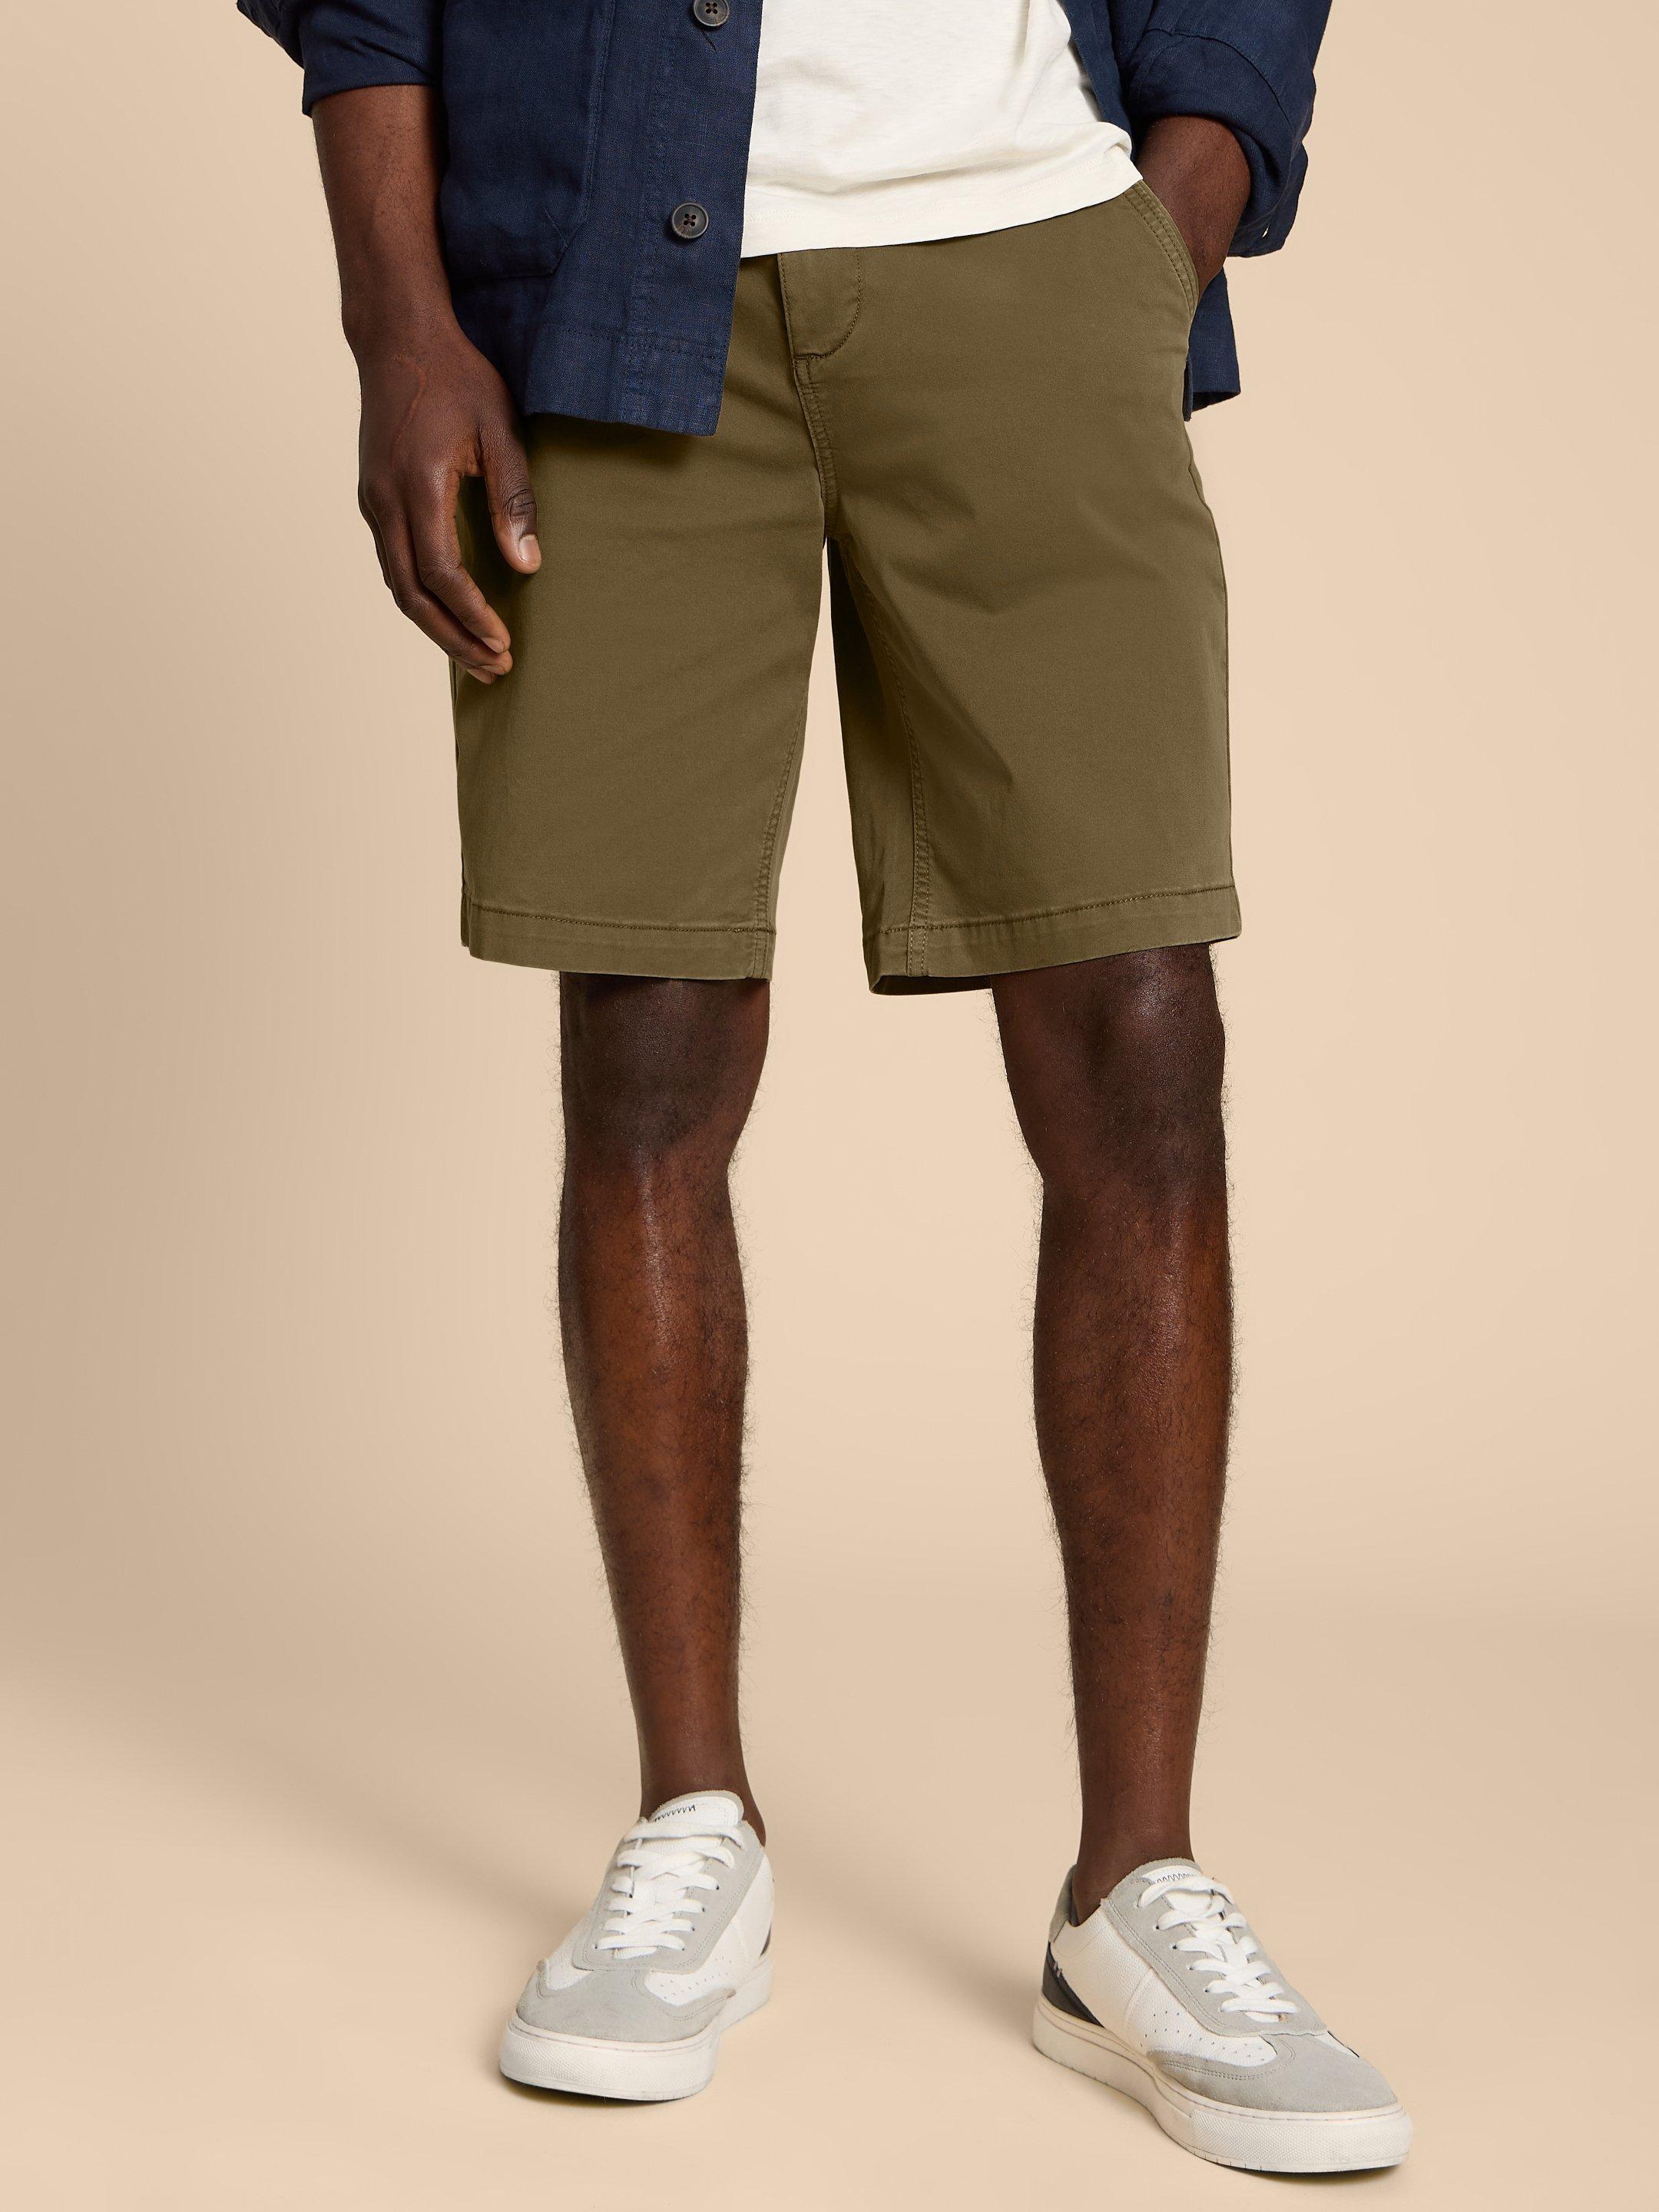 Polo Ralph Lauren Green Khaki & Chino Shorts for Men